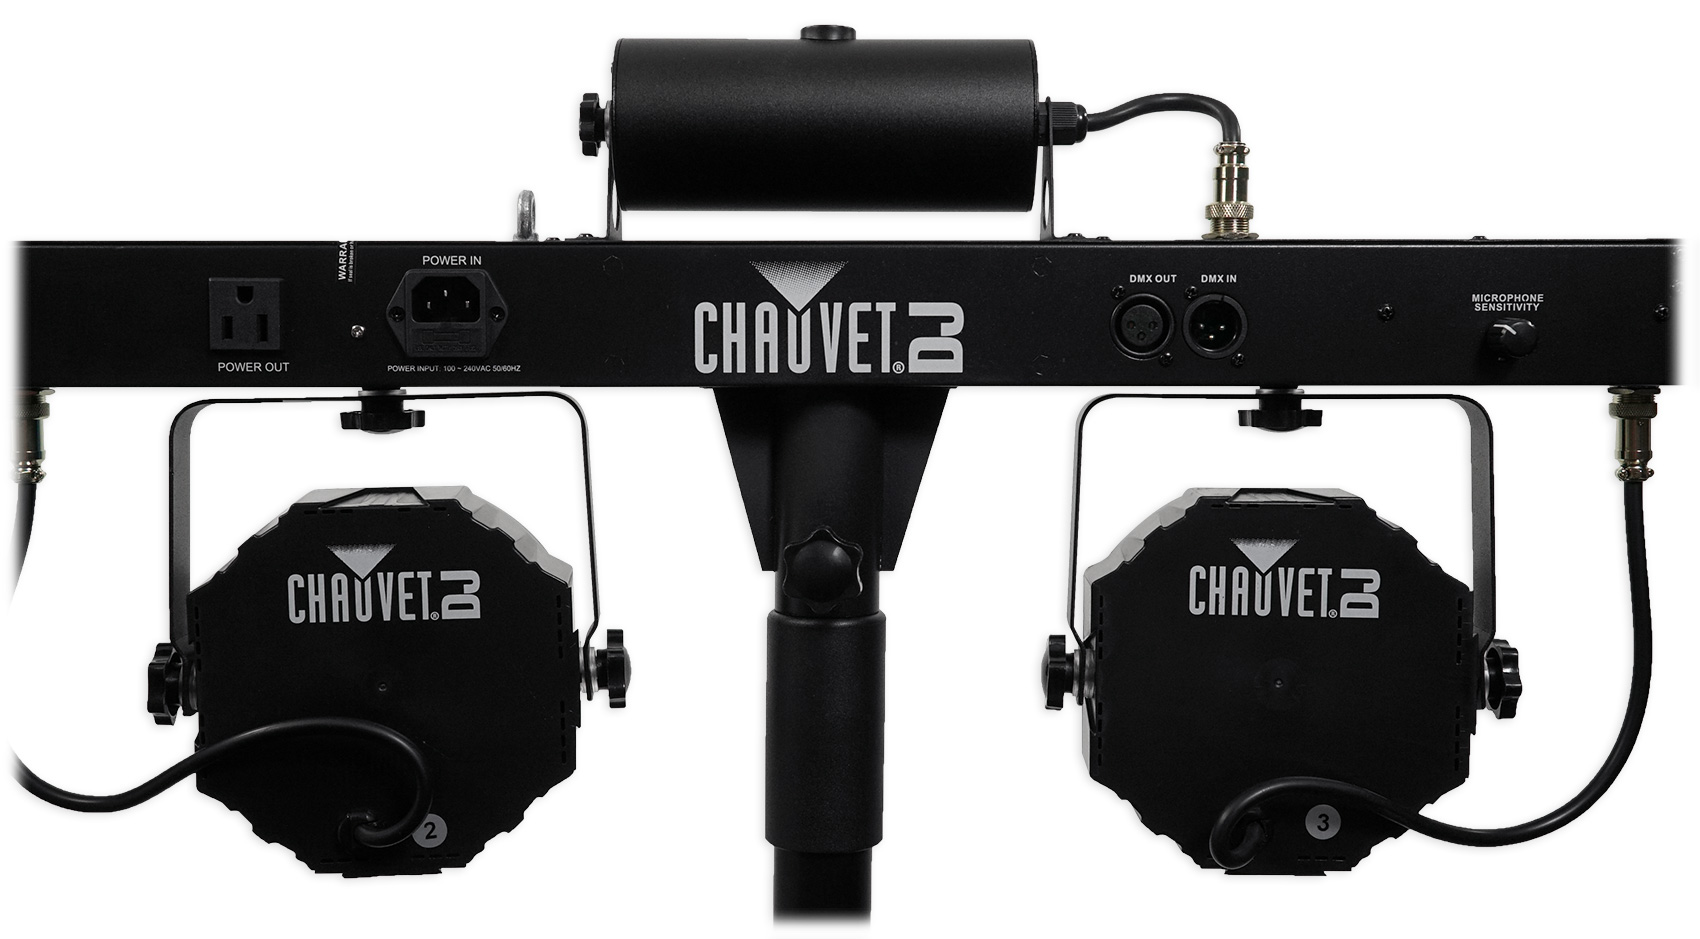 Chauvet GigBar 2.0 DMX LED 4-In-1 Light FX Bar w/Tripod+Footswitch